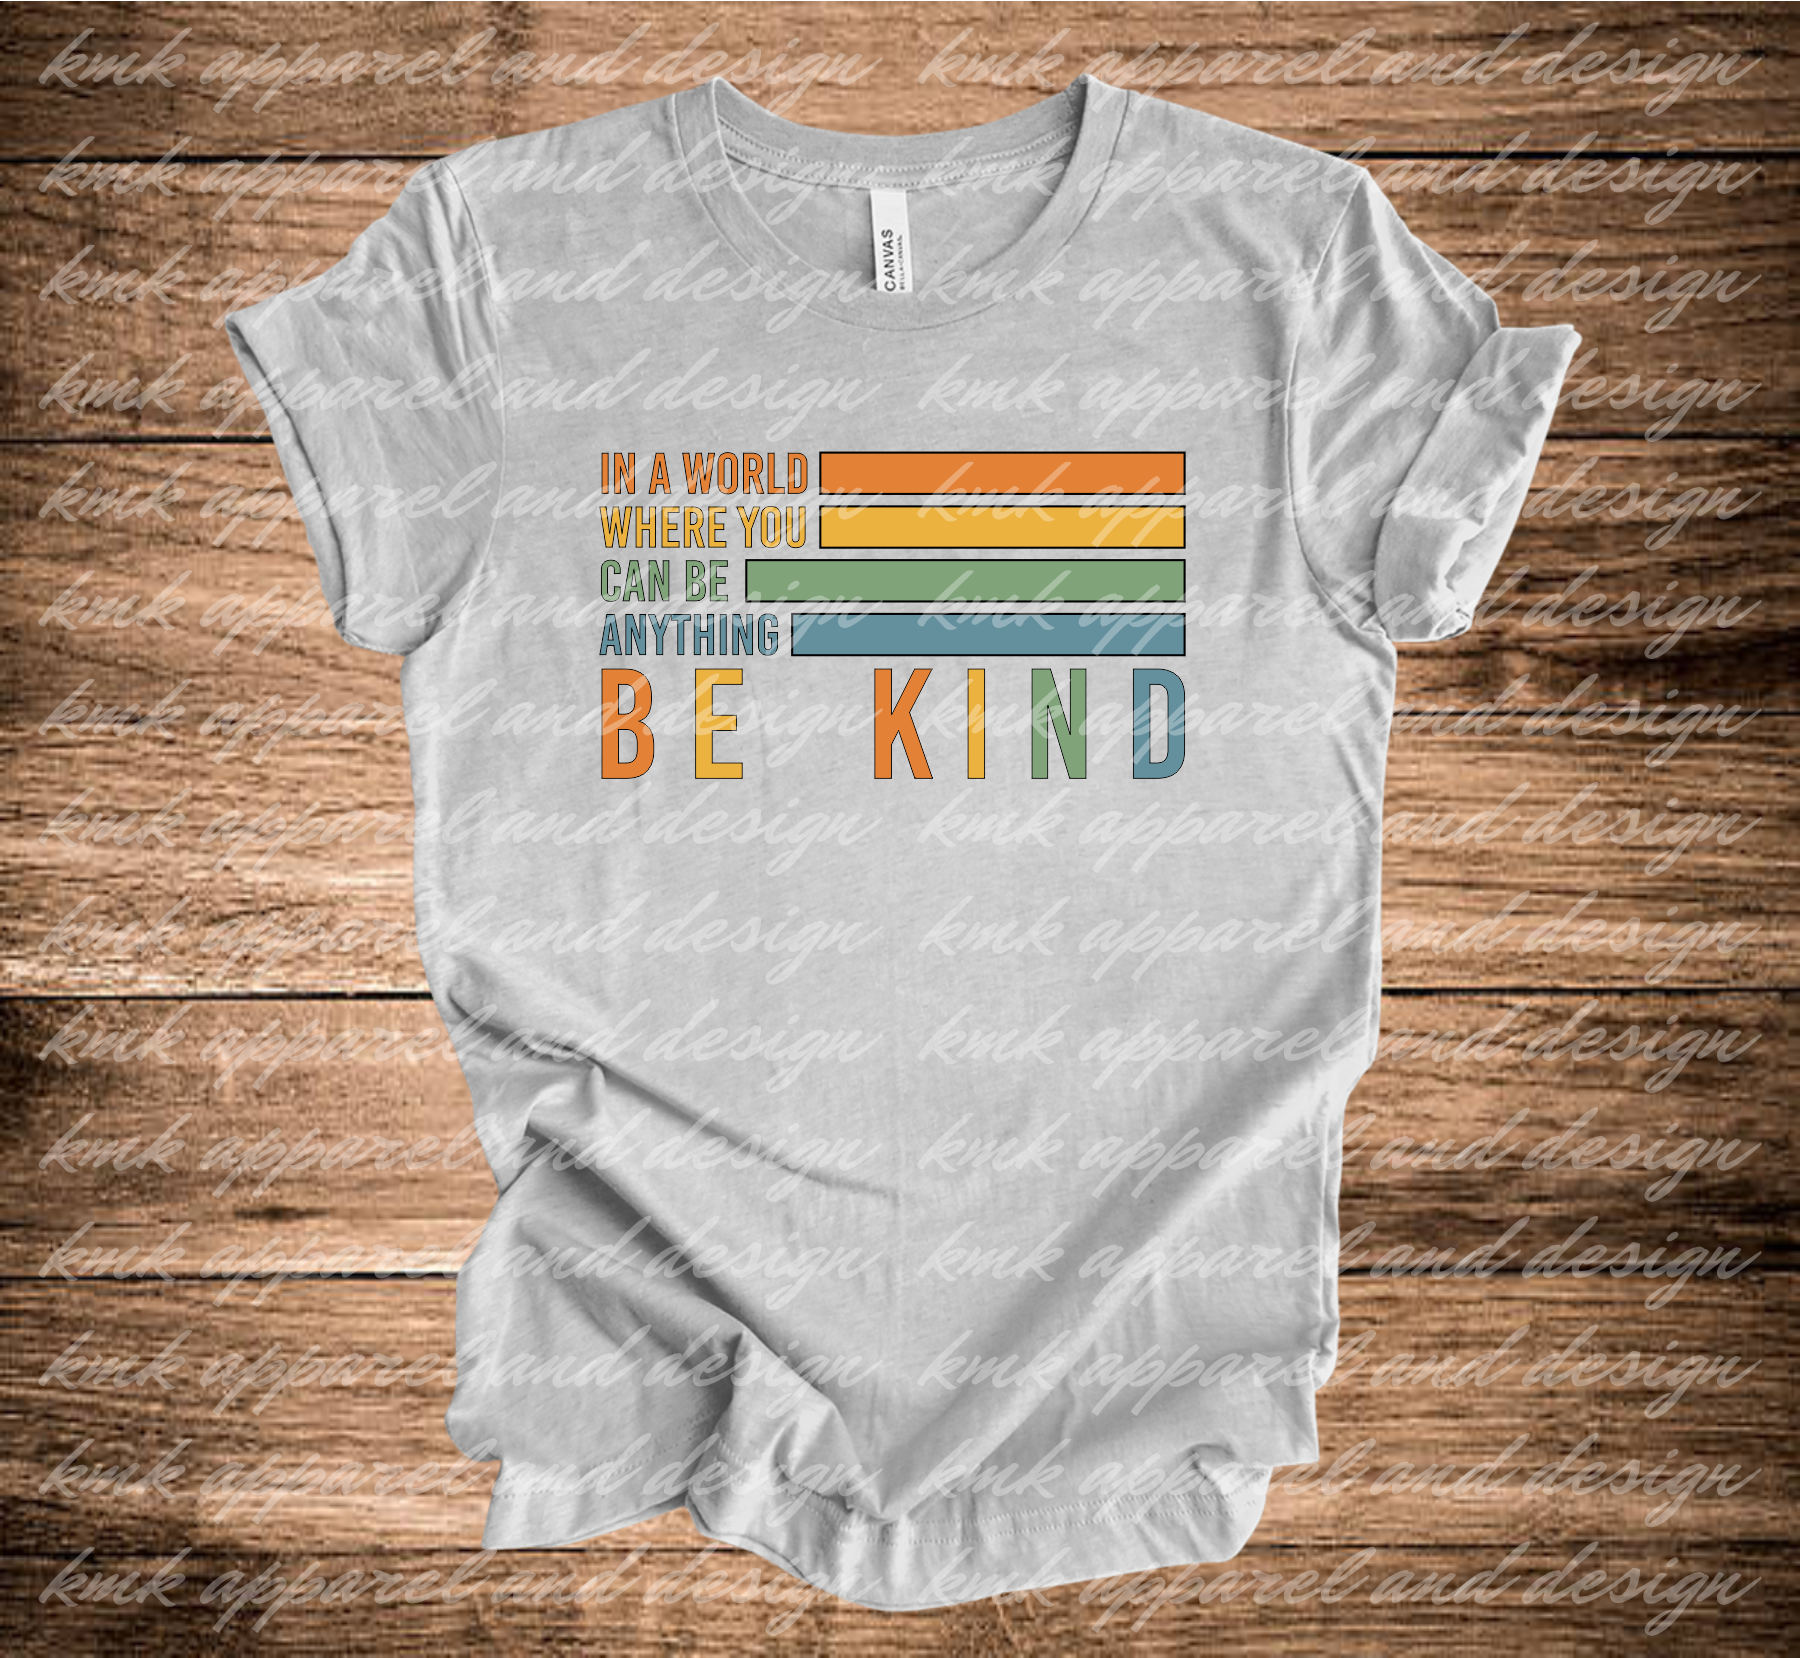 KMK Design In A World Be Kind (+ options)